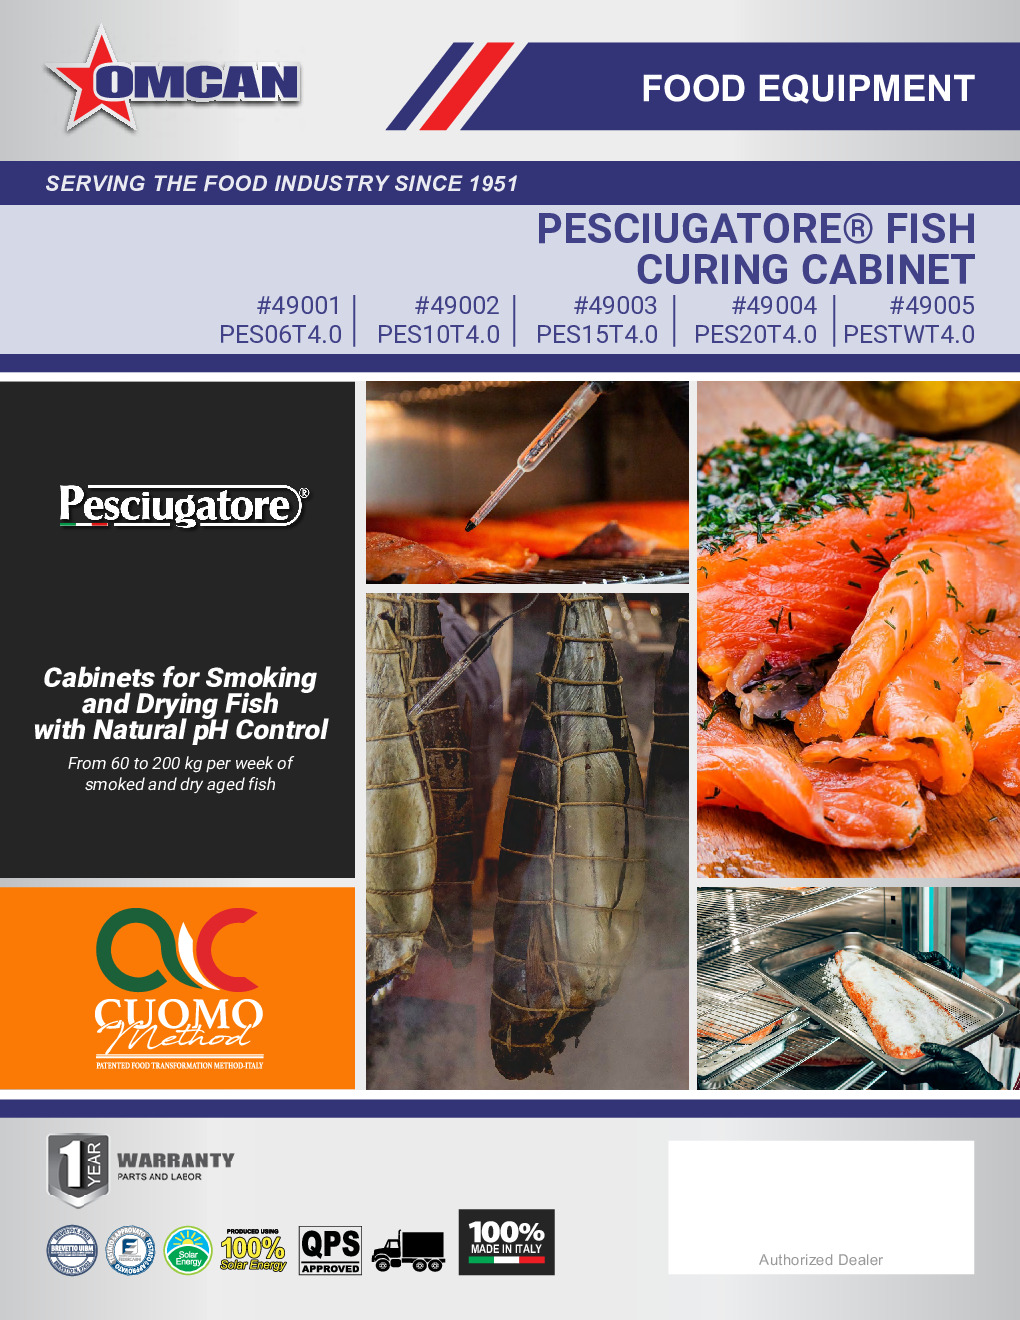 Omcan USA 49003 Pesciugatore Fish Curing Cabinet, 330Ibs Capacity